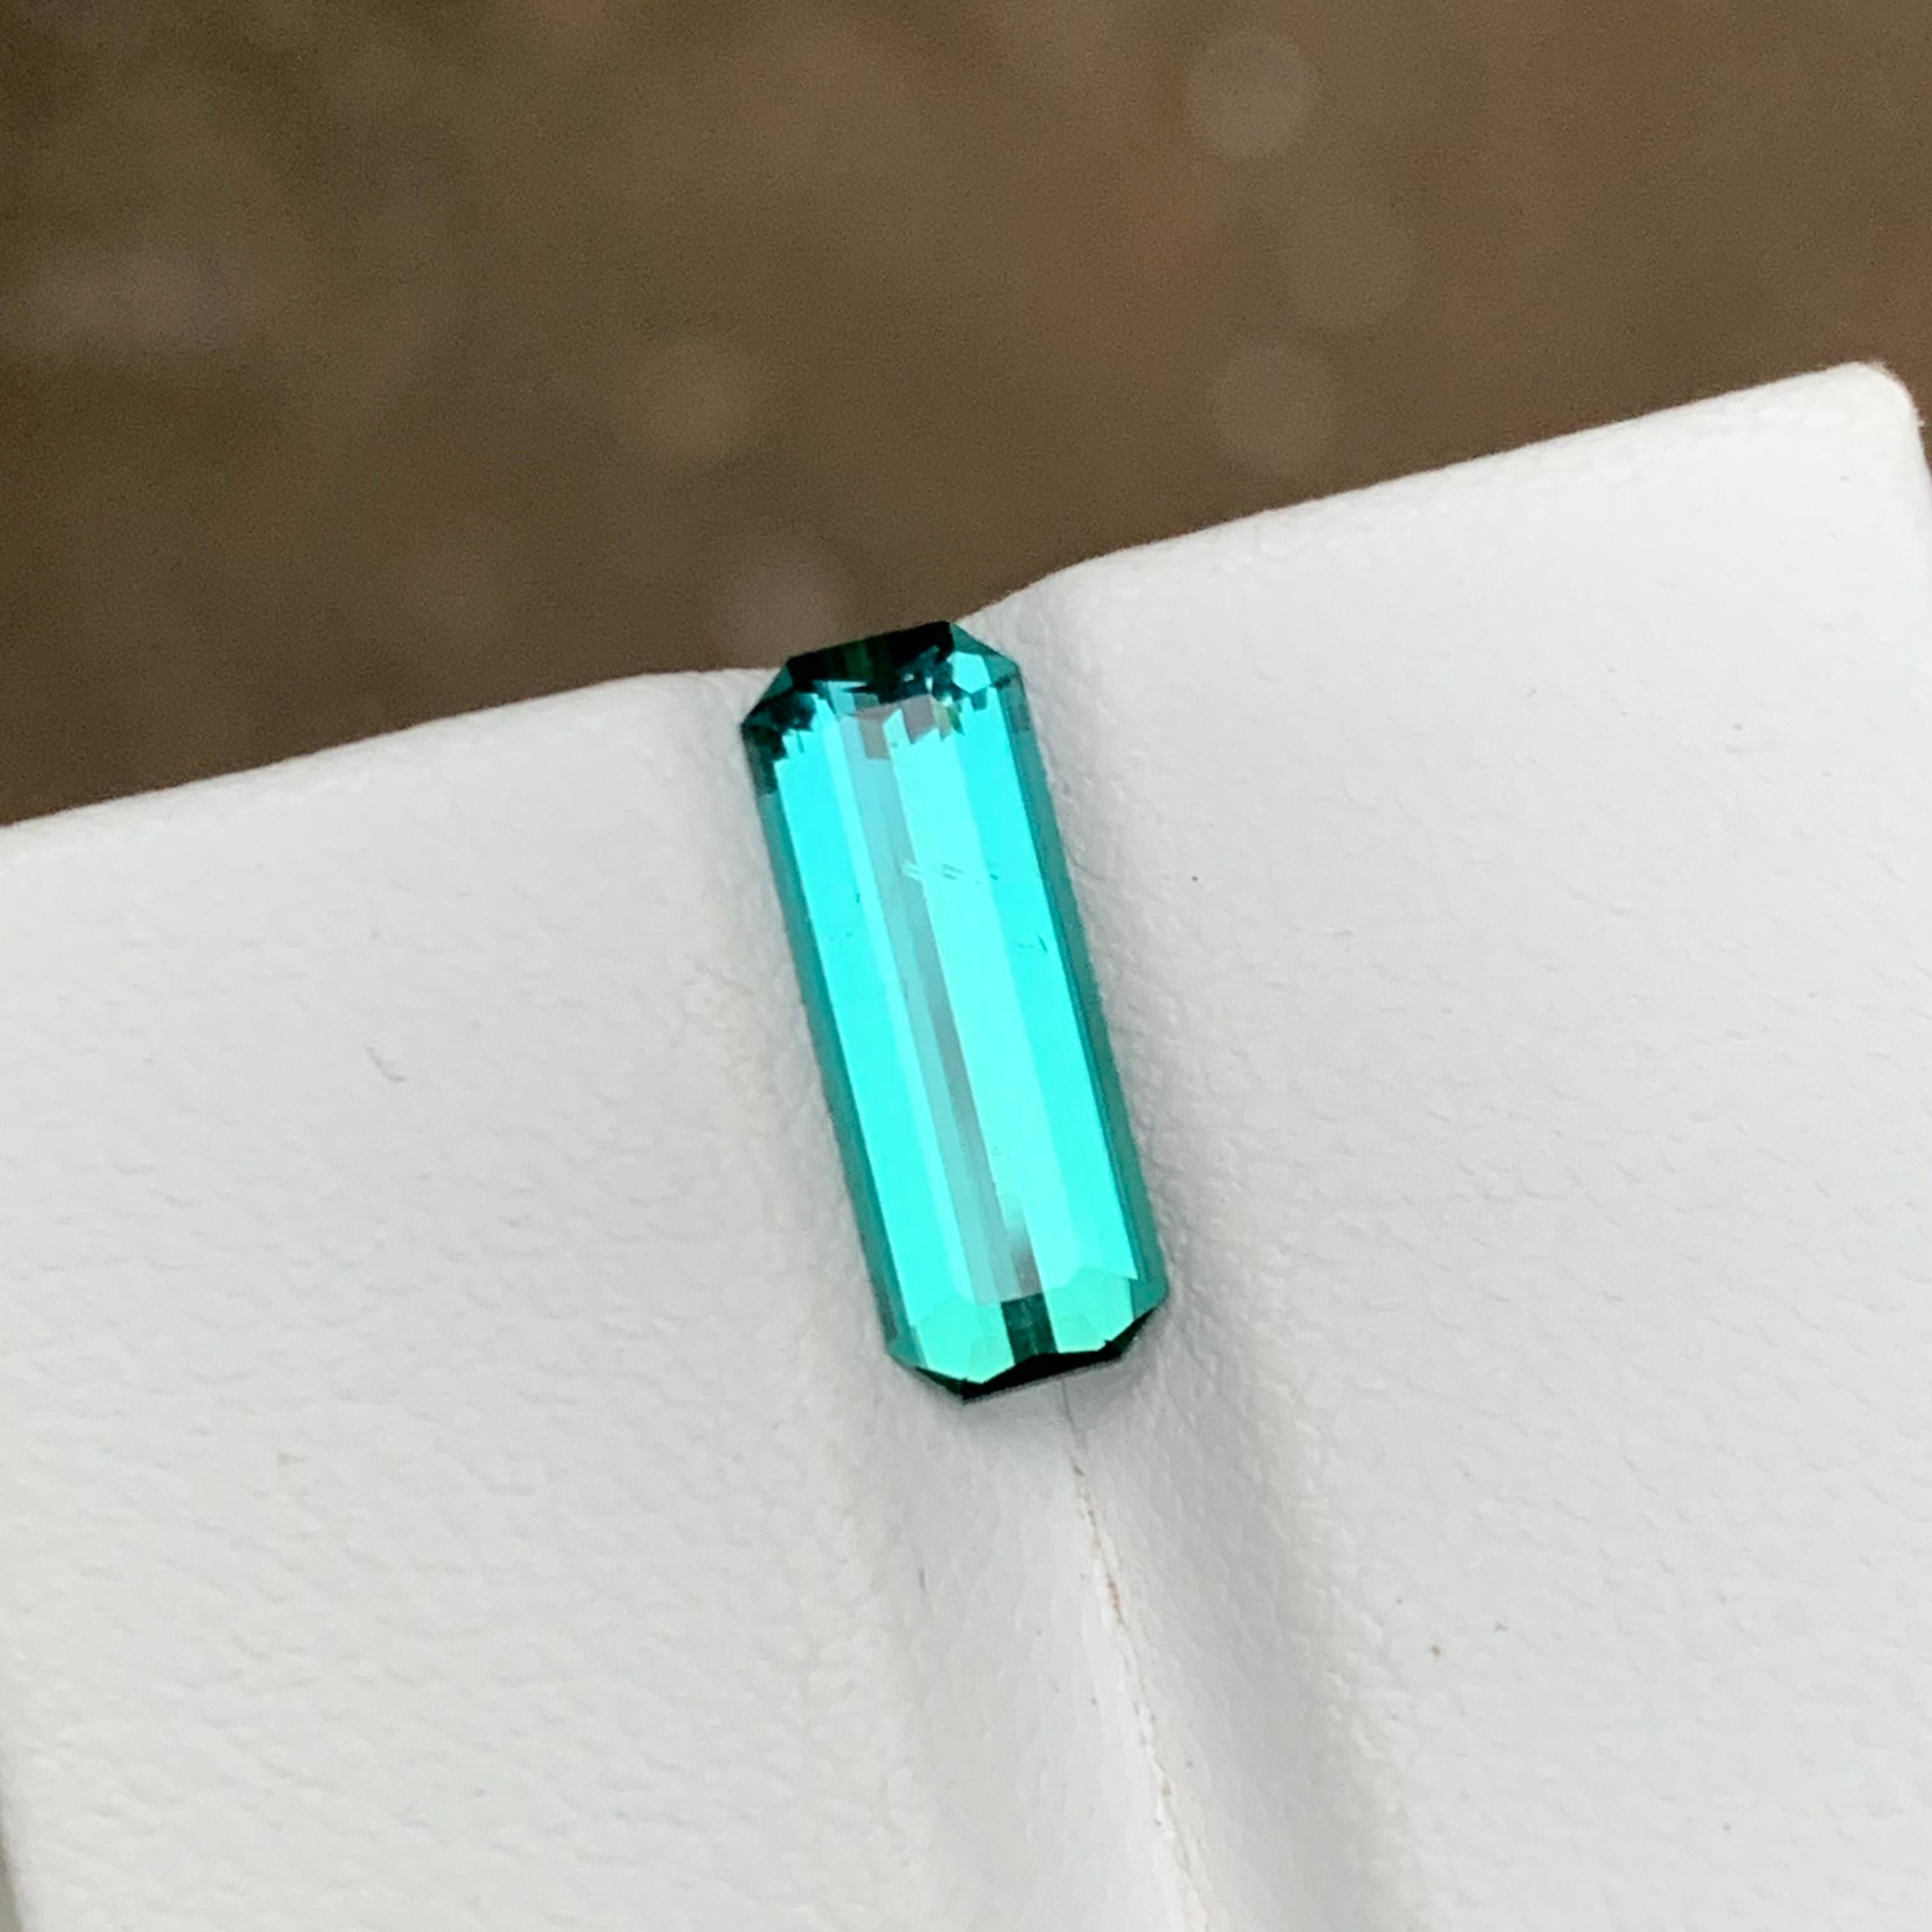 Rare Vivid Neon Bluish Green Hue Tourmaline Gemstone 1.75Ct Emerald Cut for Ring For Sale 6